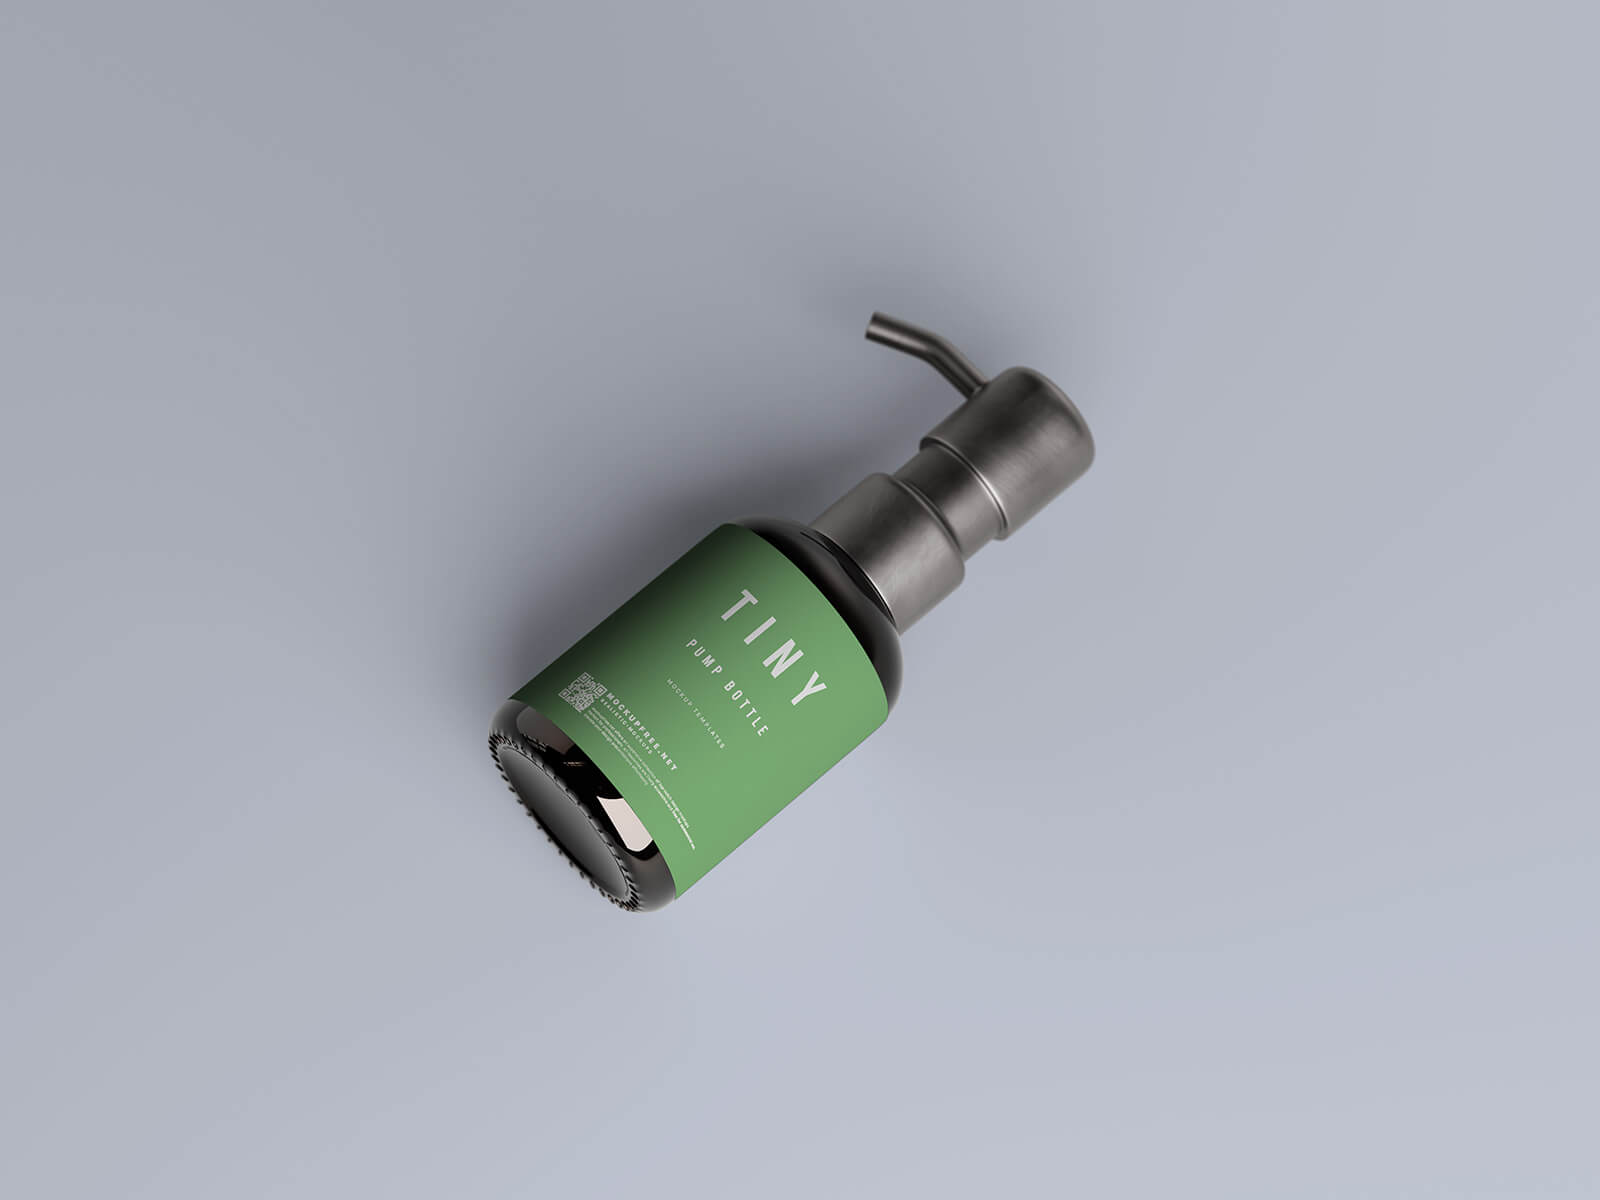 Free Small Pump Bottle Mockup PSD